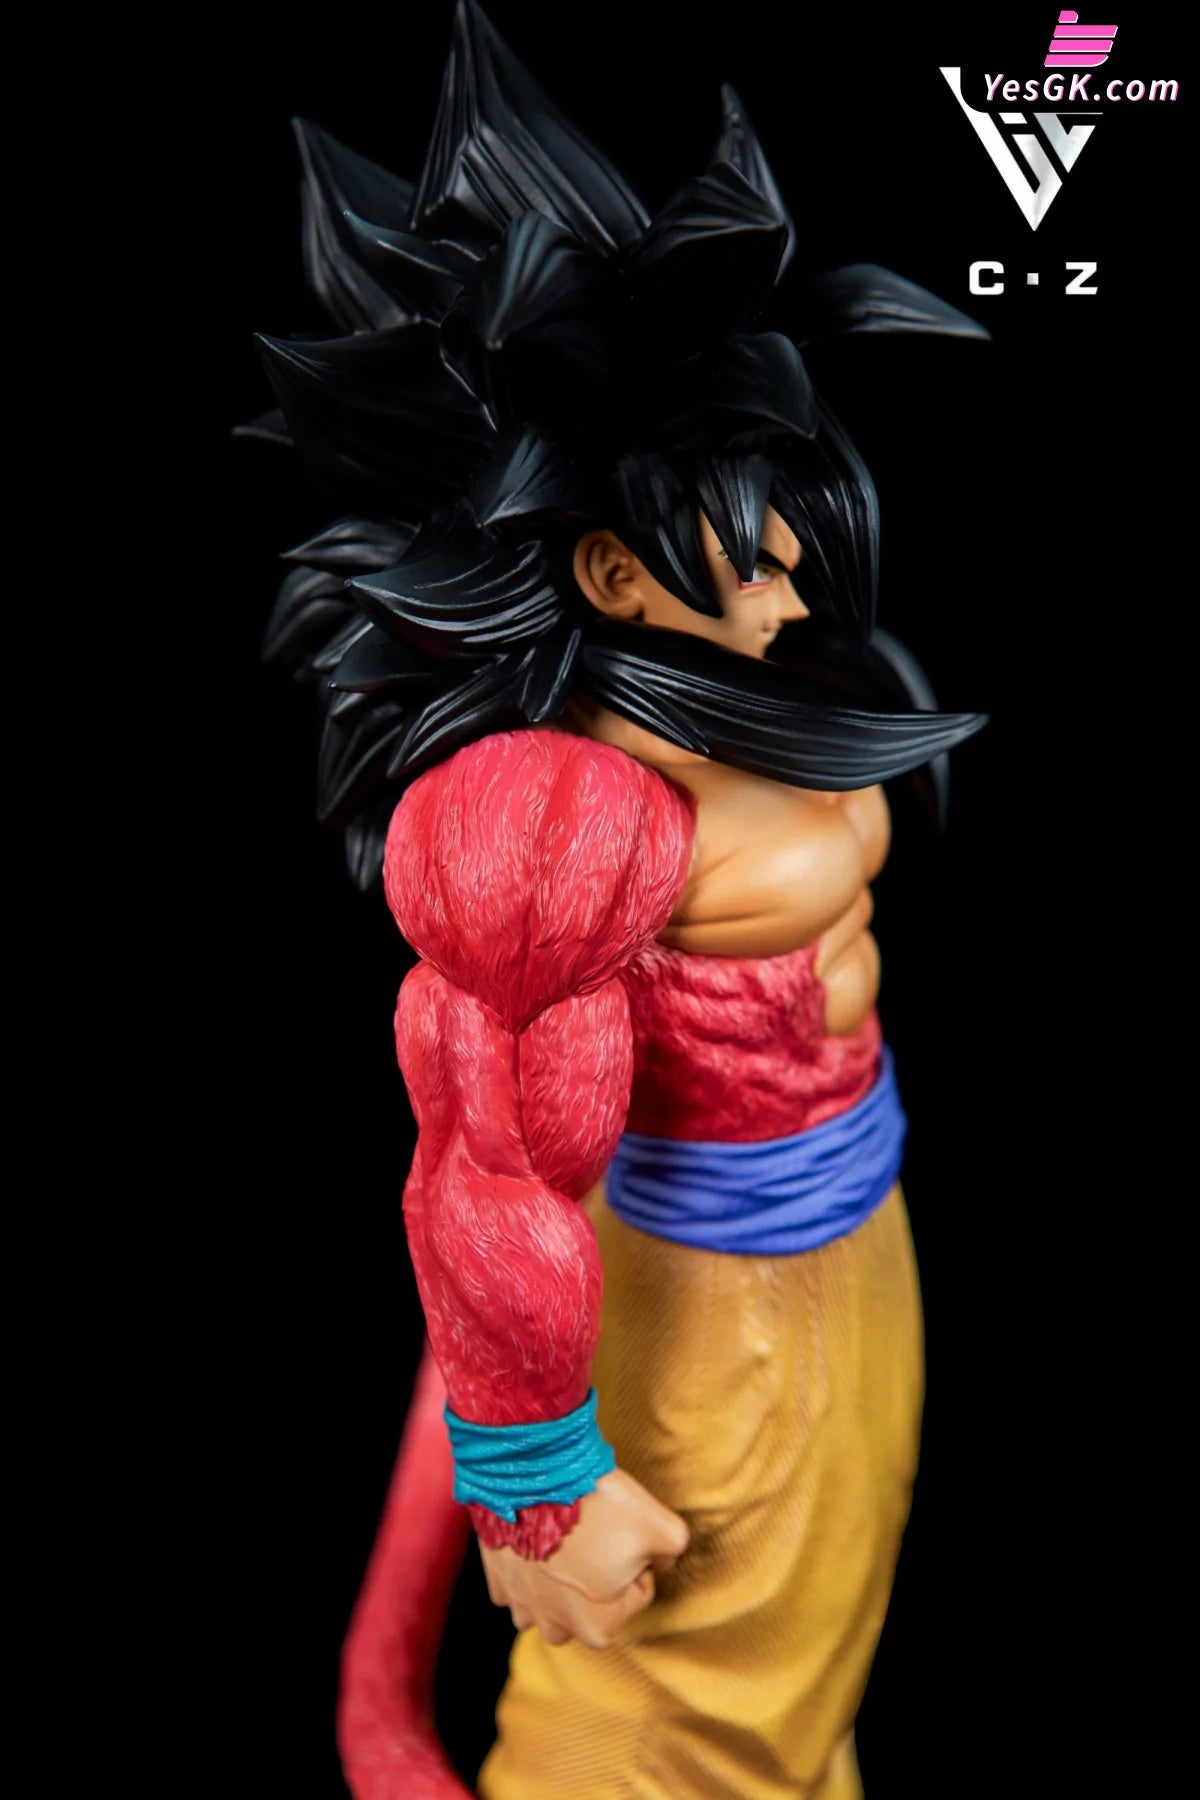 Dragon Ball Super Saiyan 4 Son Goku Resin Statue - Cz Studio [Pre-Order]